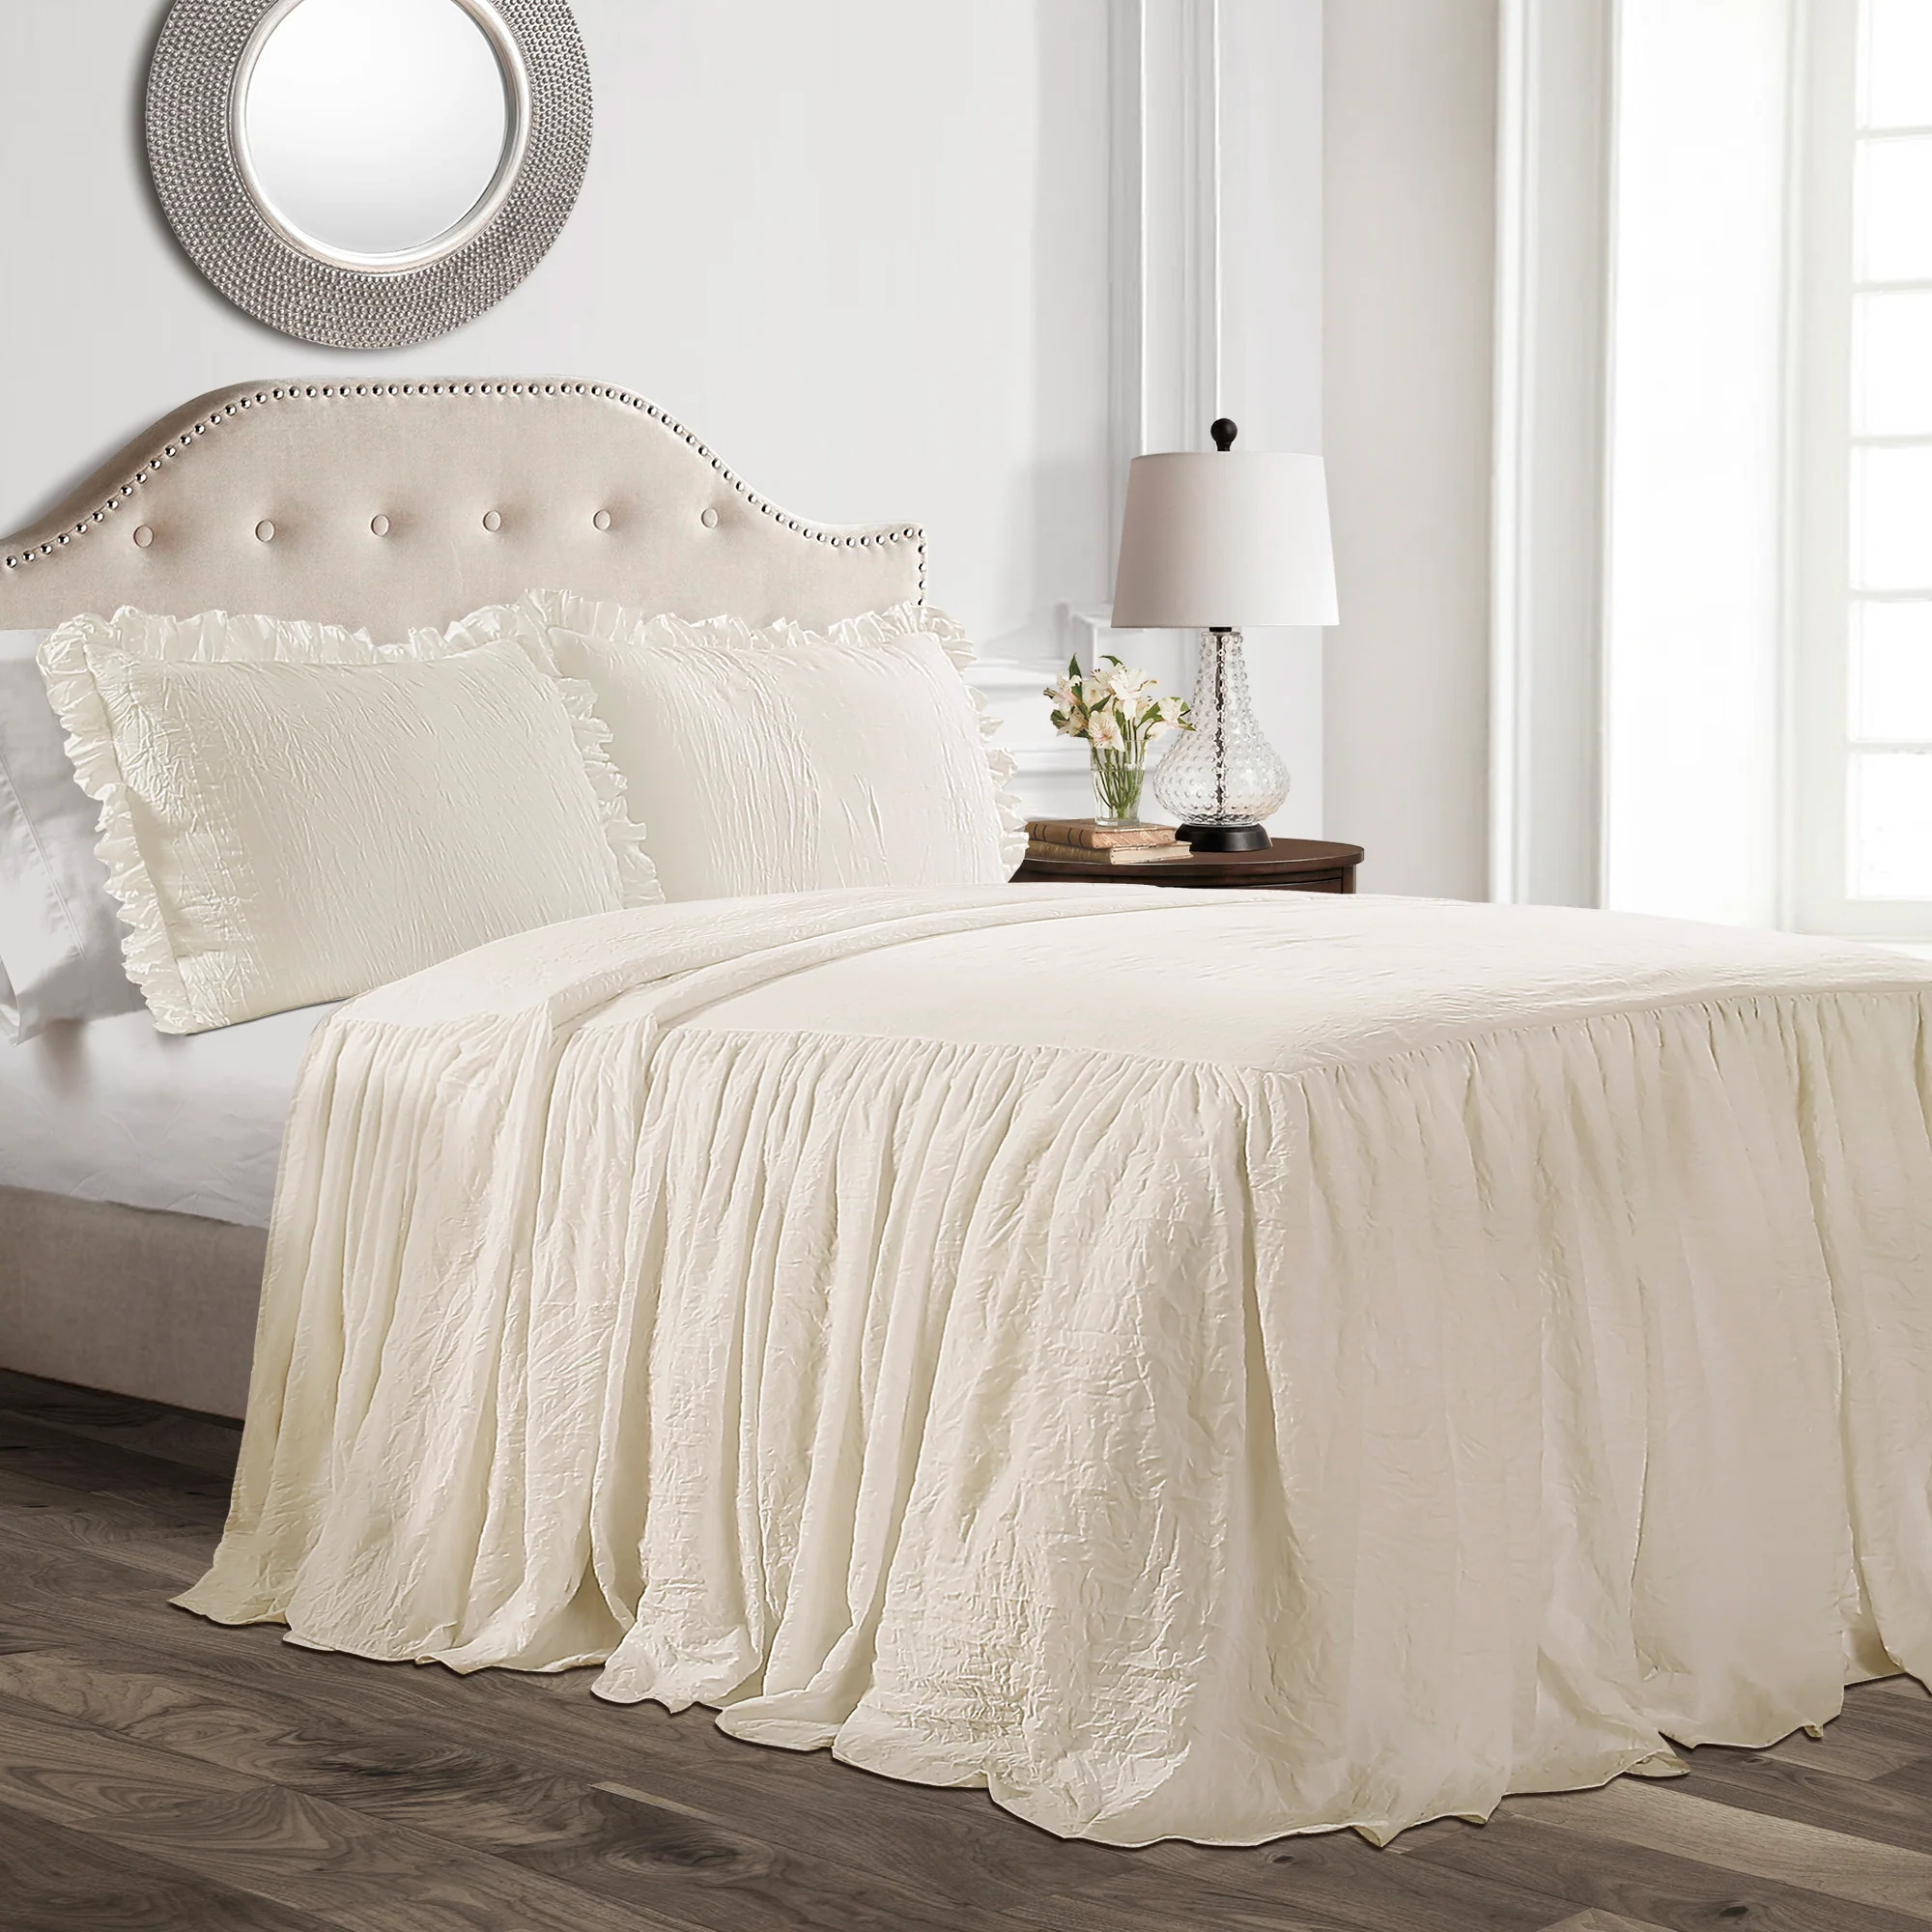 Lush Decor Ruffle Skirt Bedspread, King, White, 3-Pc Set - image 3 of 11